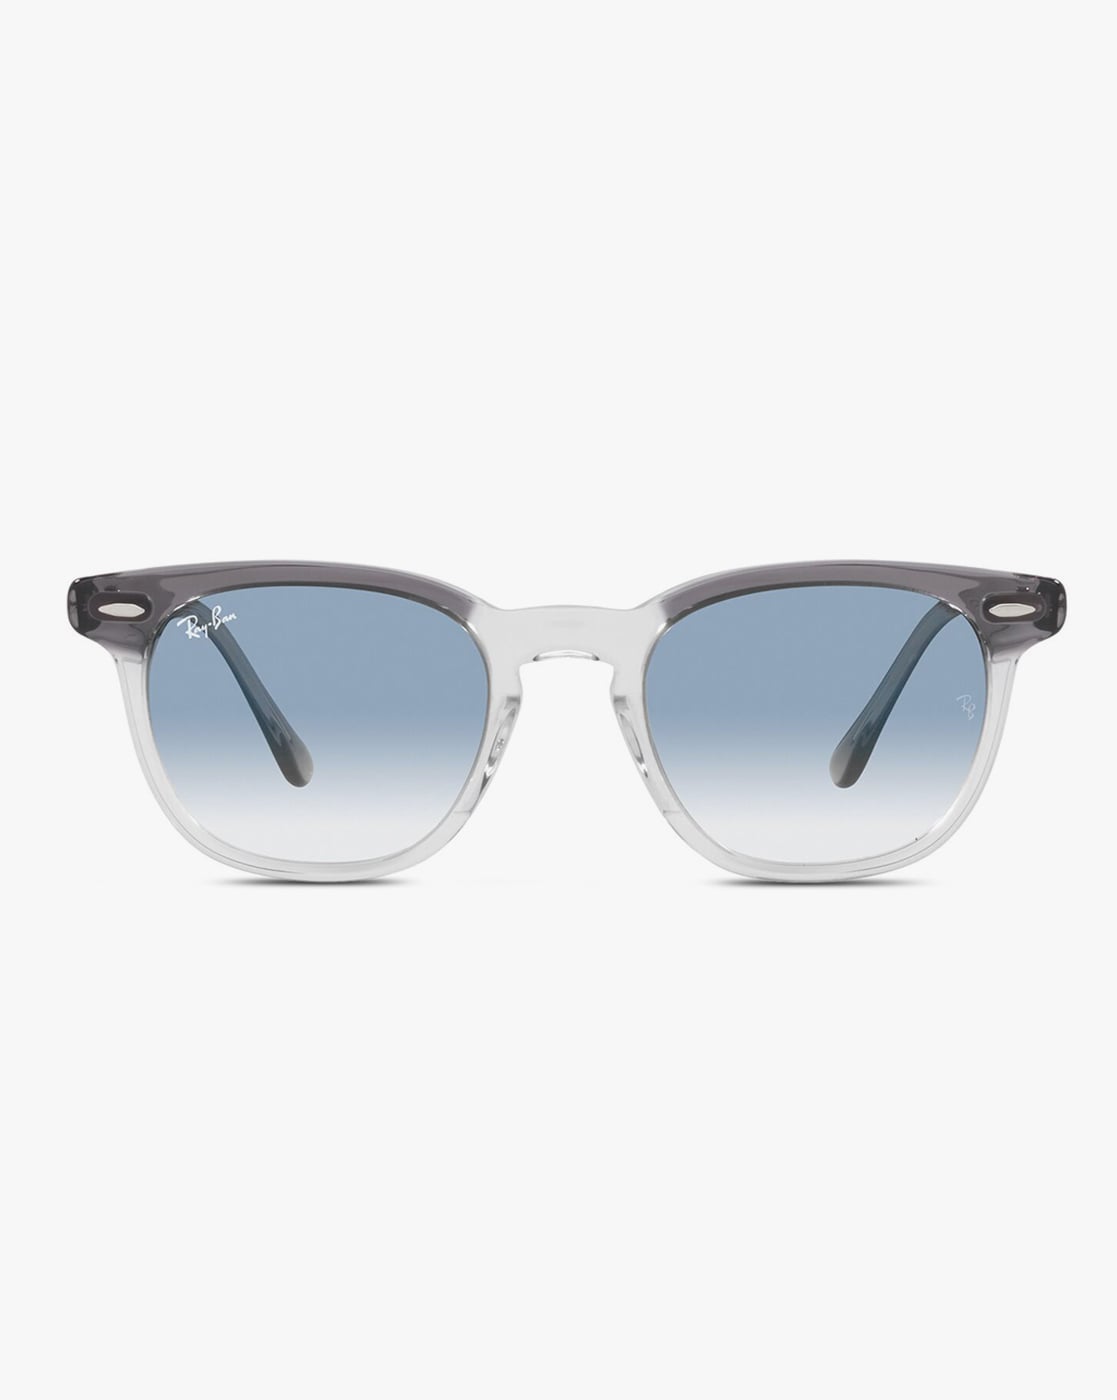 Share 136+ grey sunglasses latest